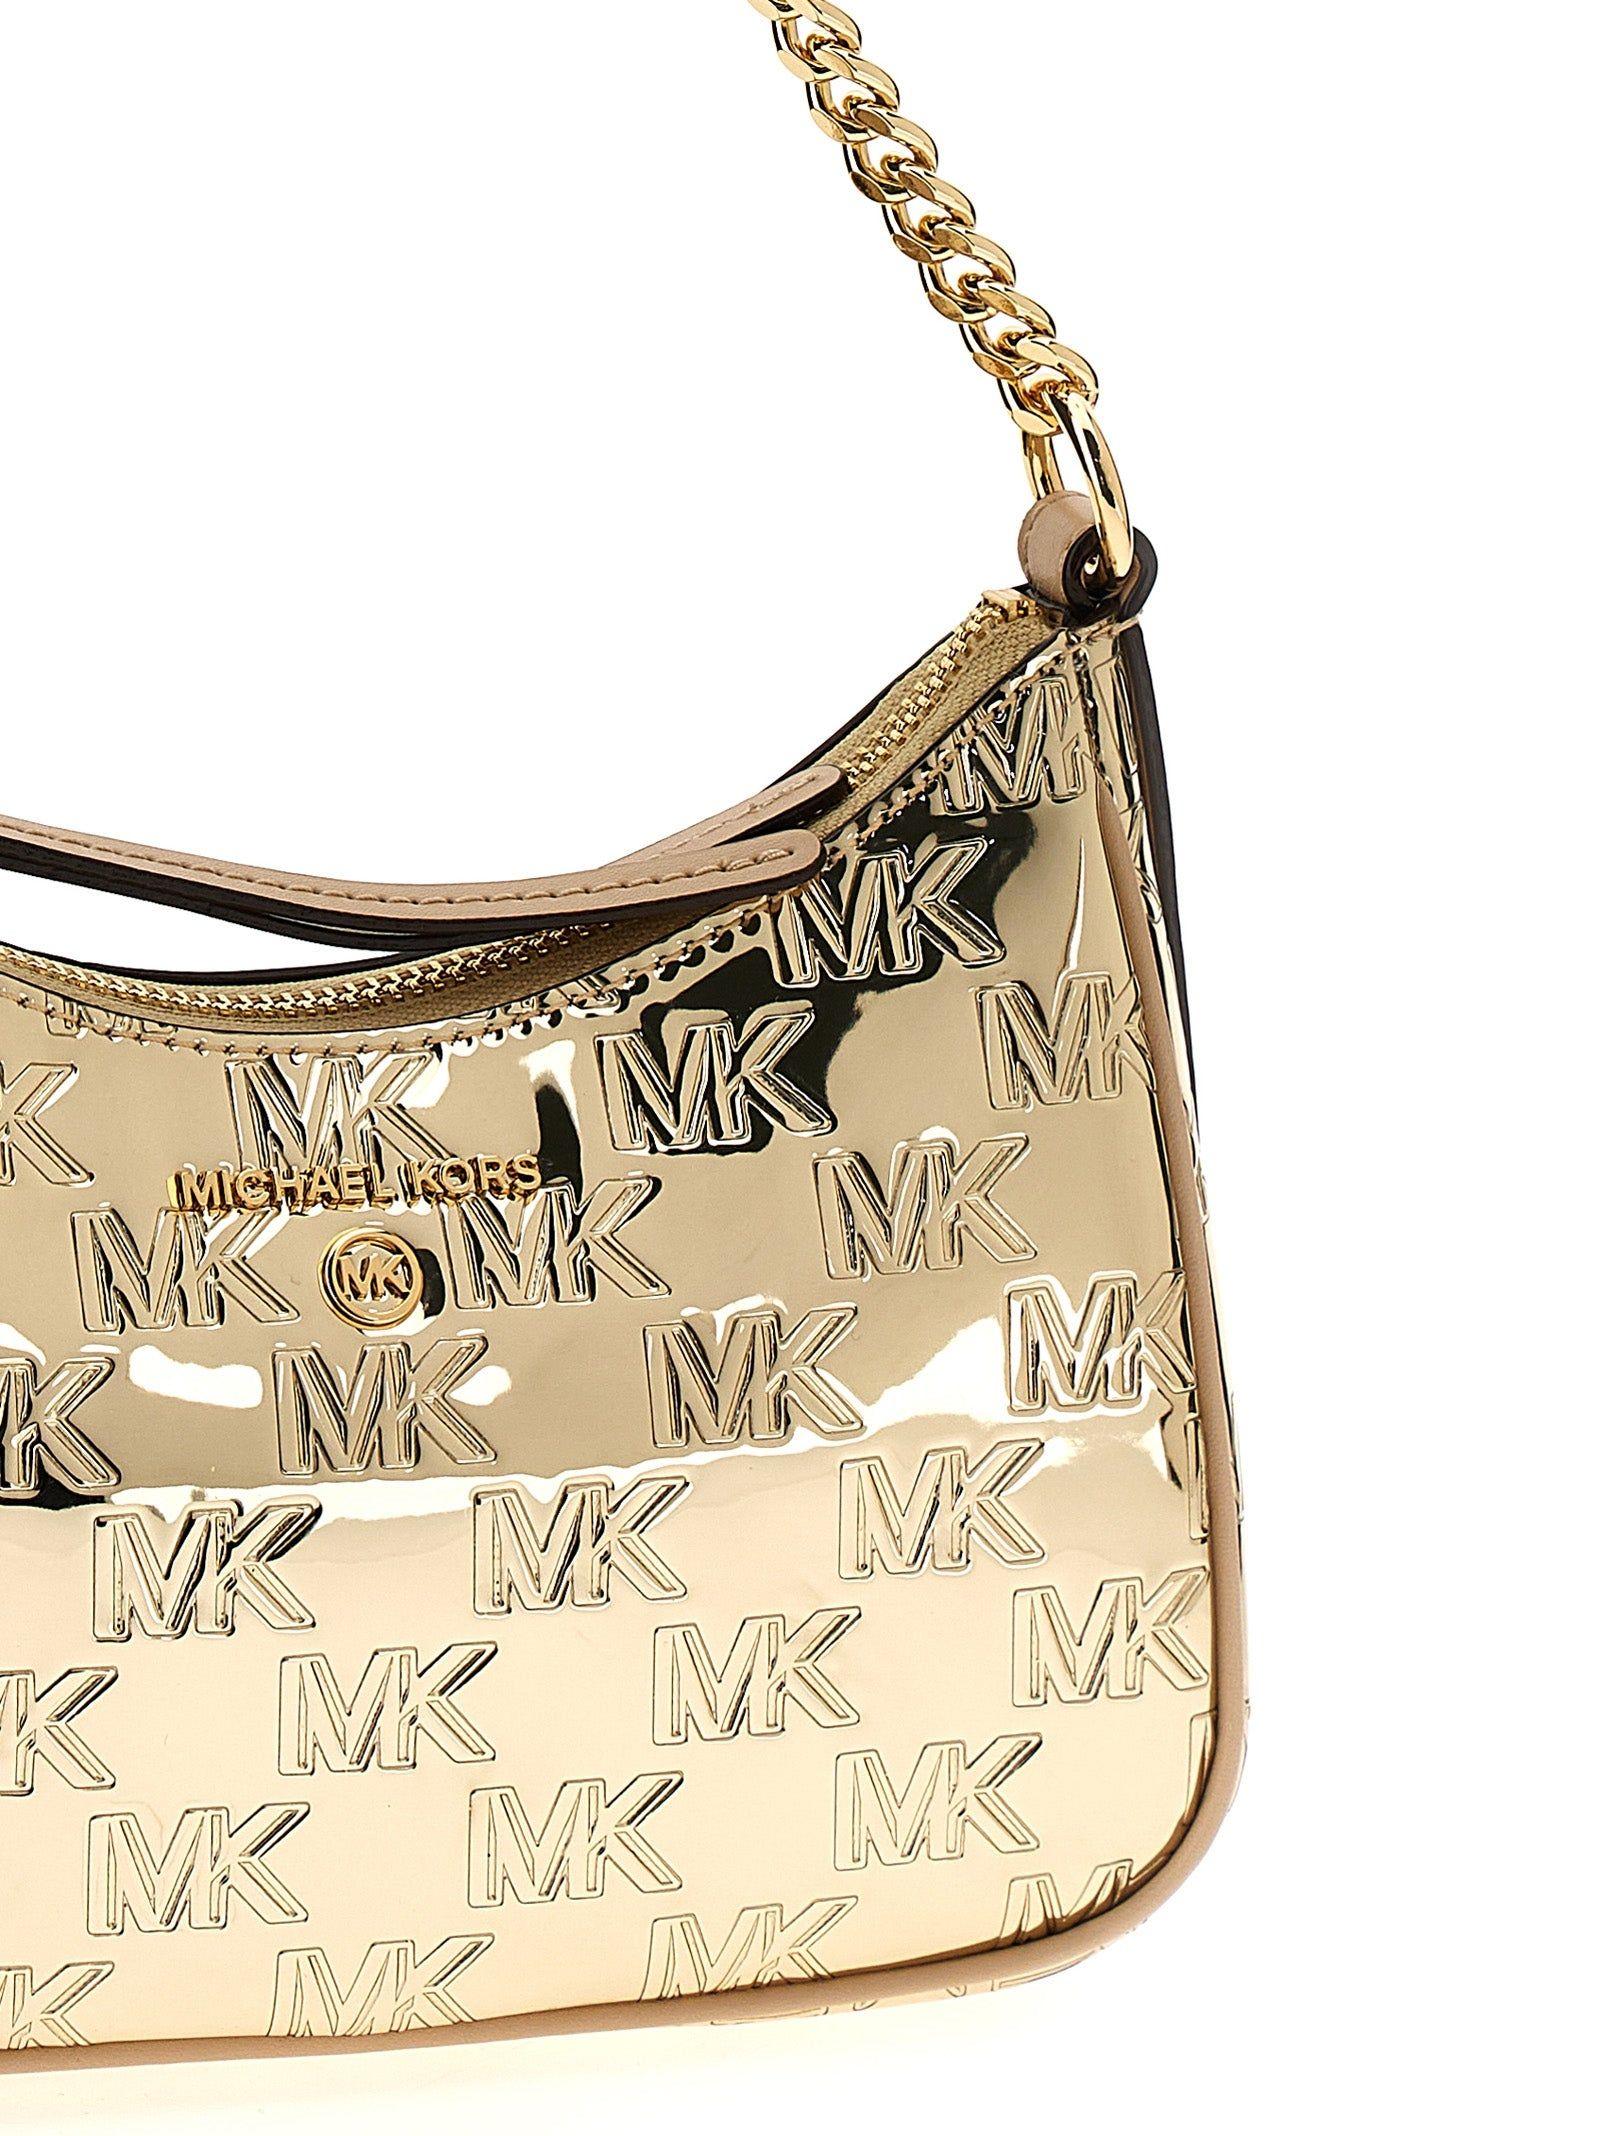 Michael Kors Purse Hand Bag With Wallet | eBay